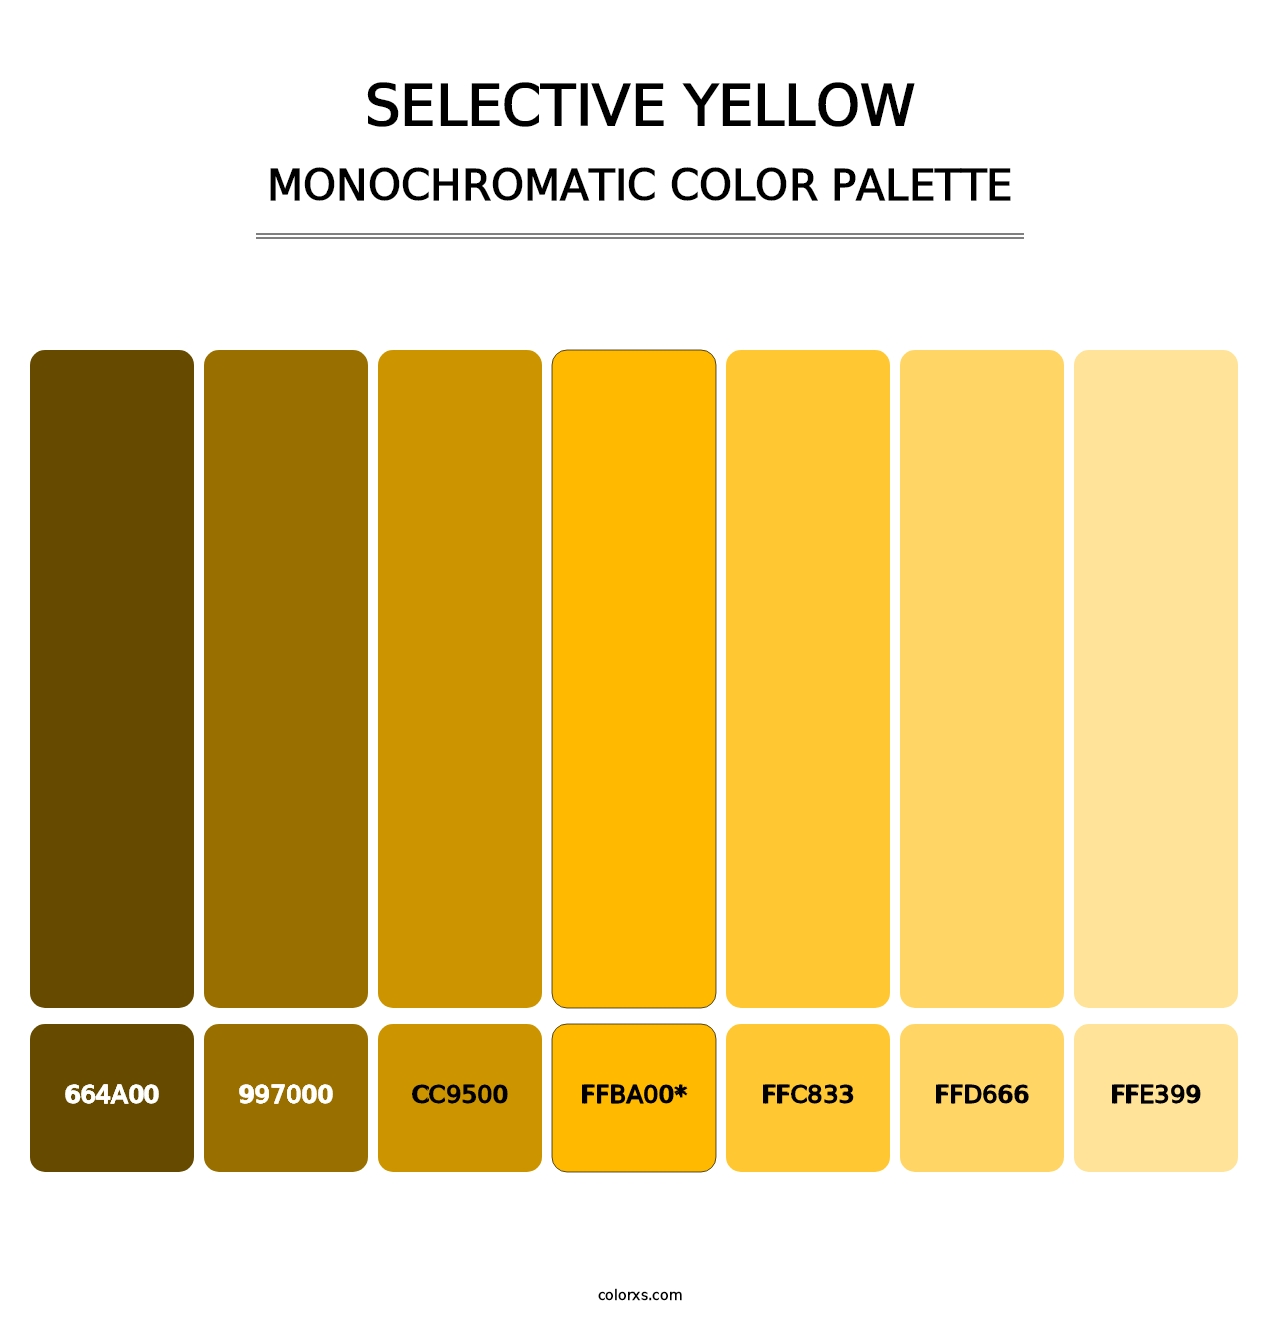 Selective yellow - Monochromatic Color Palette